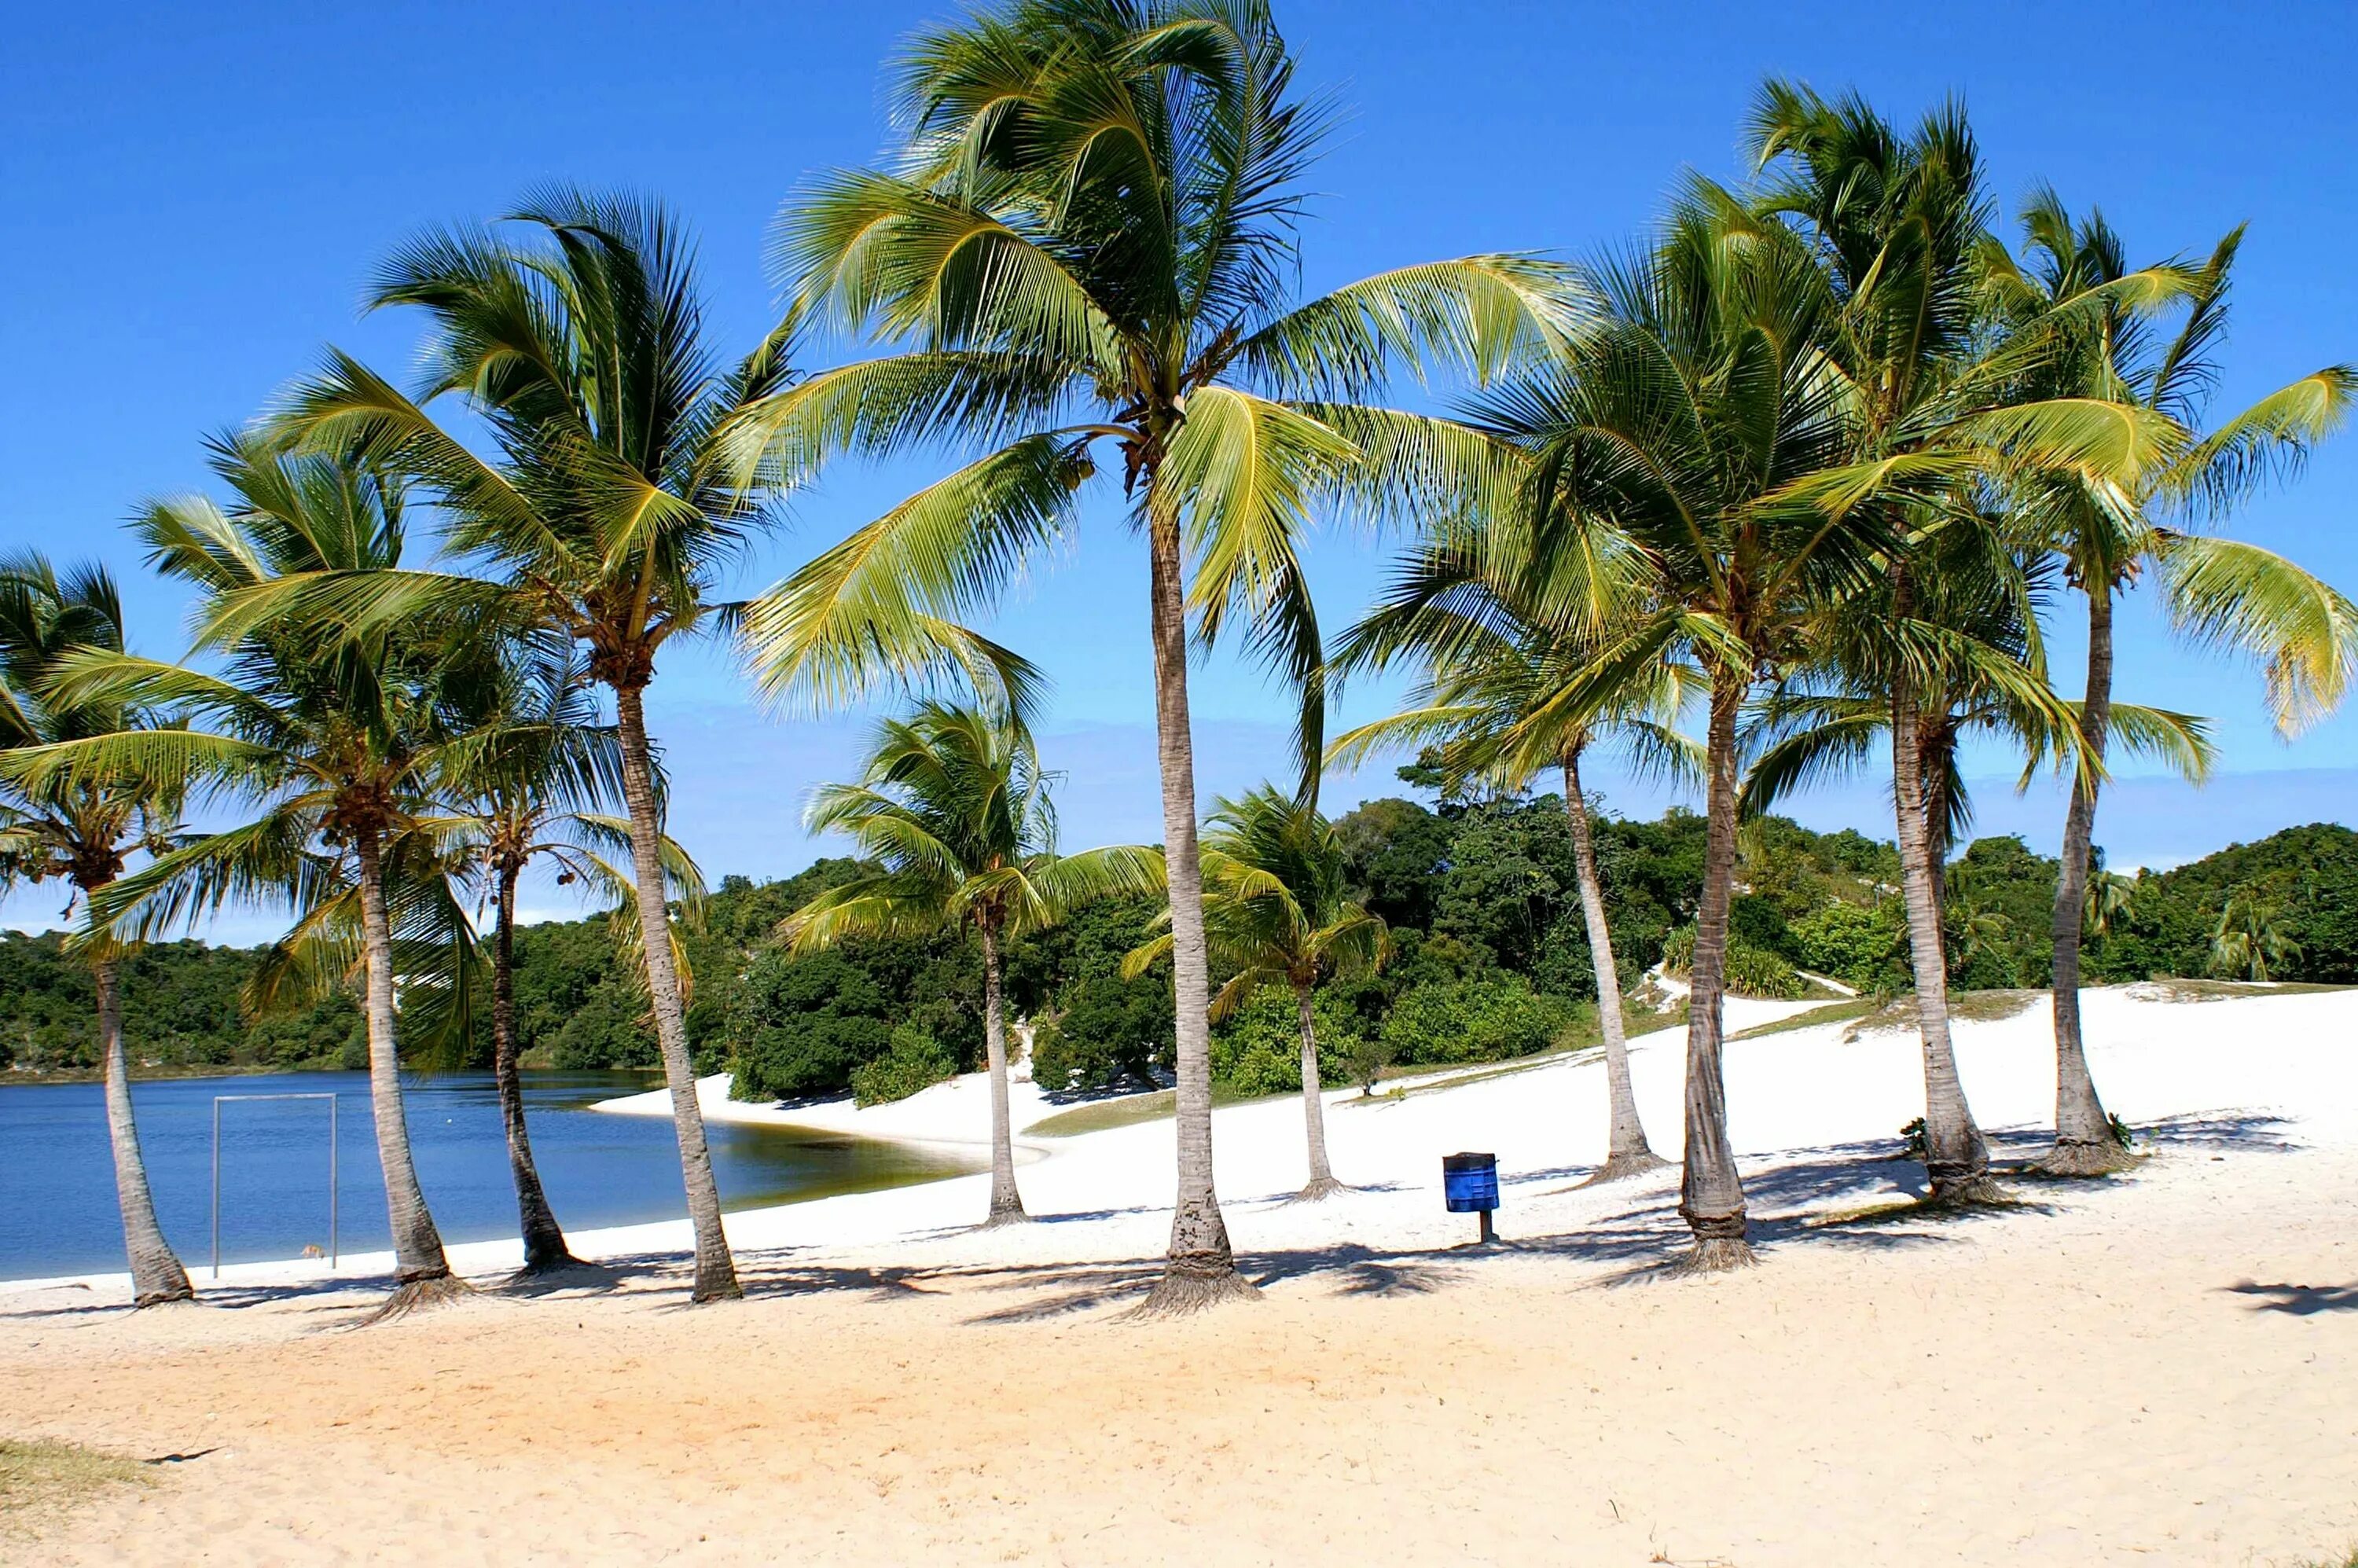 Bahia Brazil Beach. Порто-Праи на Сантьяго кокосовые пальмы. Бразилия портосехуа Бахия. Порто-Праи на Сантьяго порт кокосовые пальмы. Baile do coqueiro 5 speed up